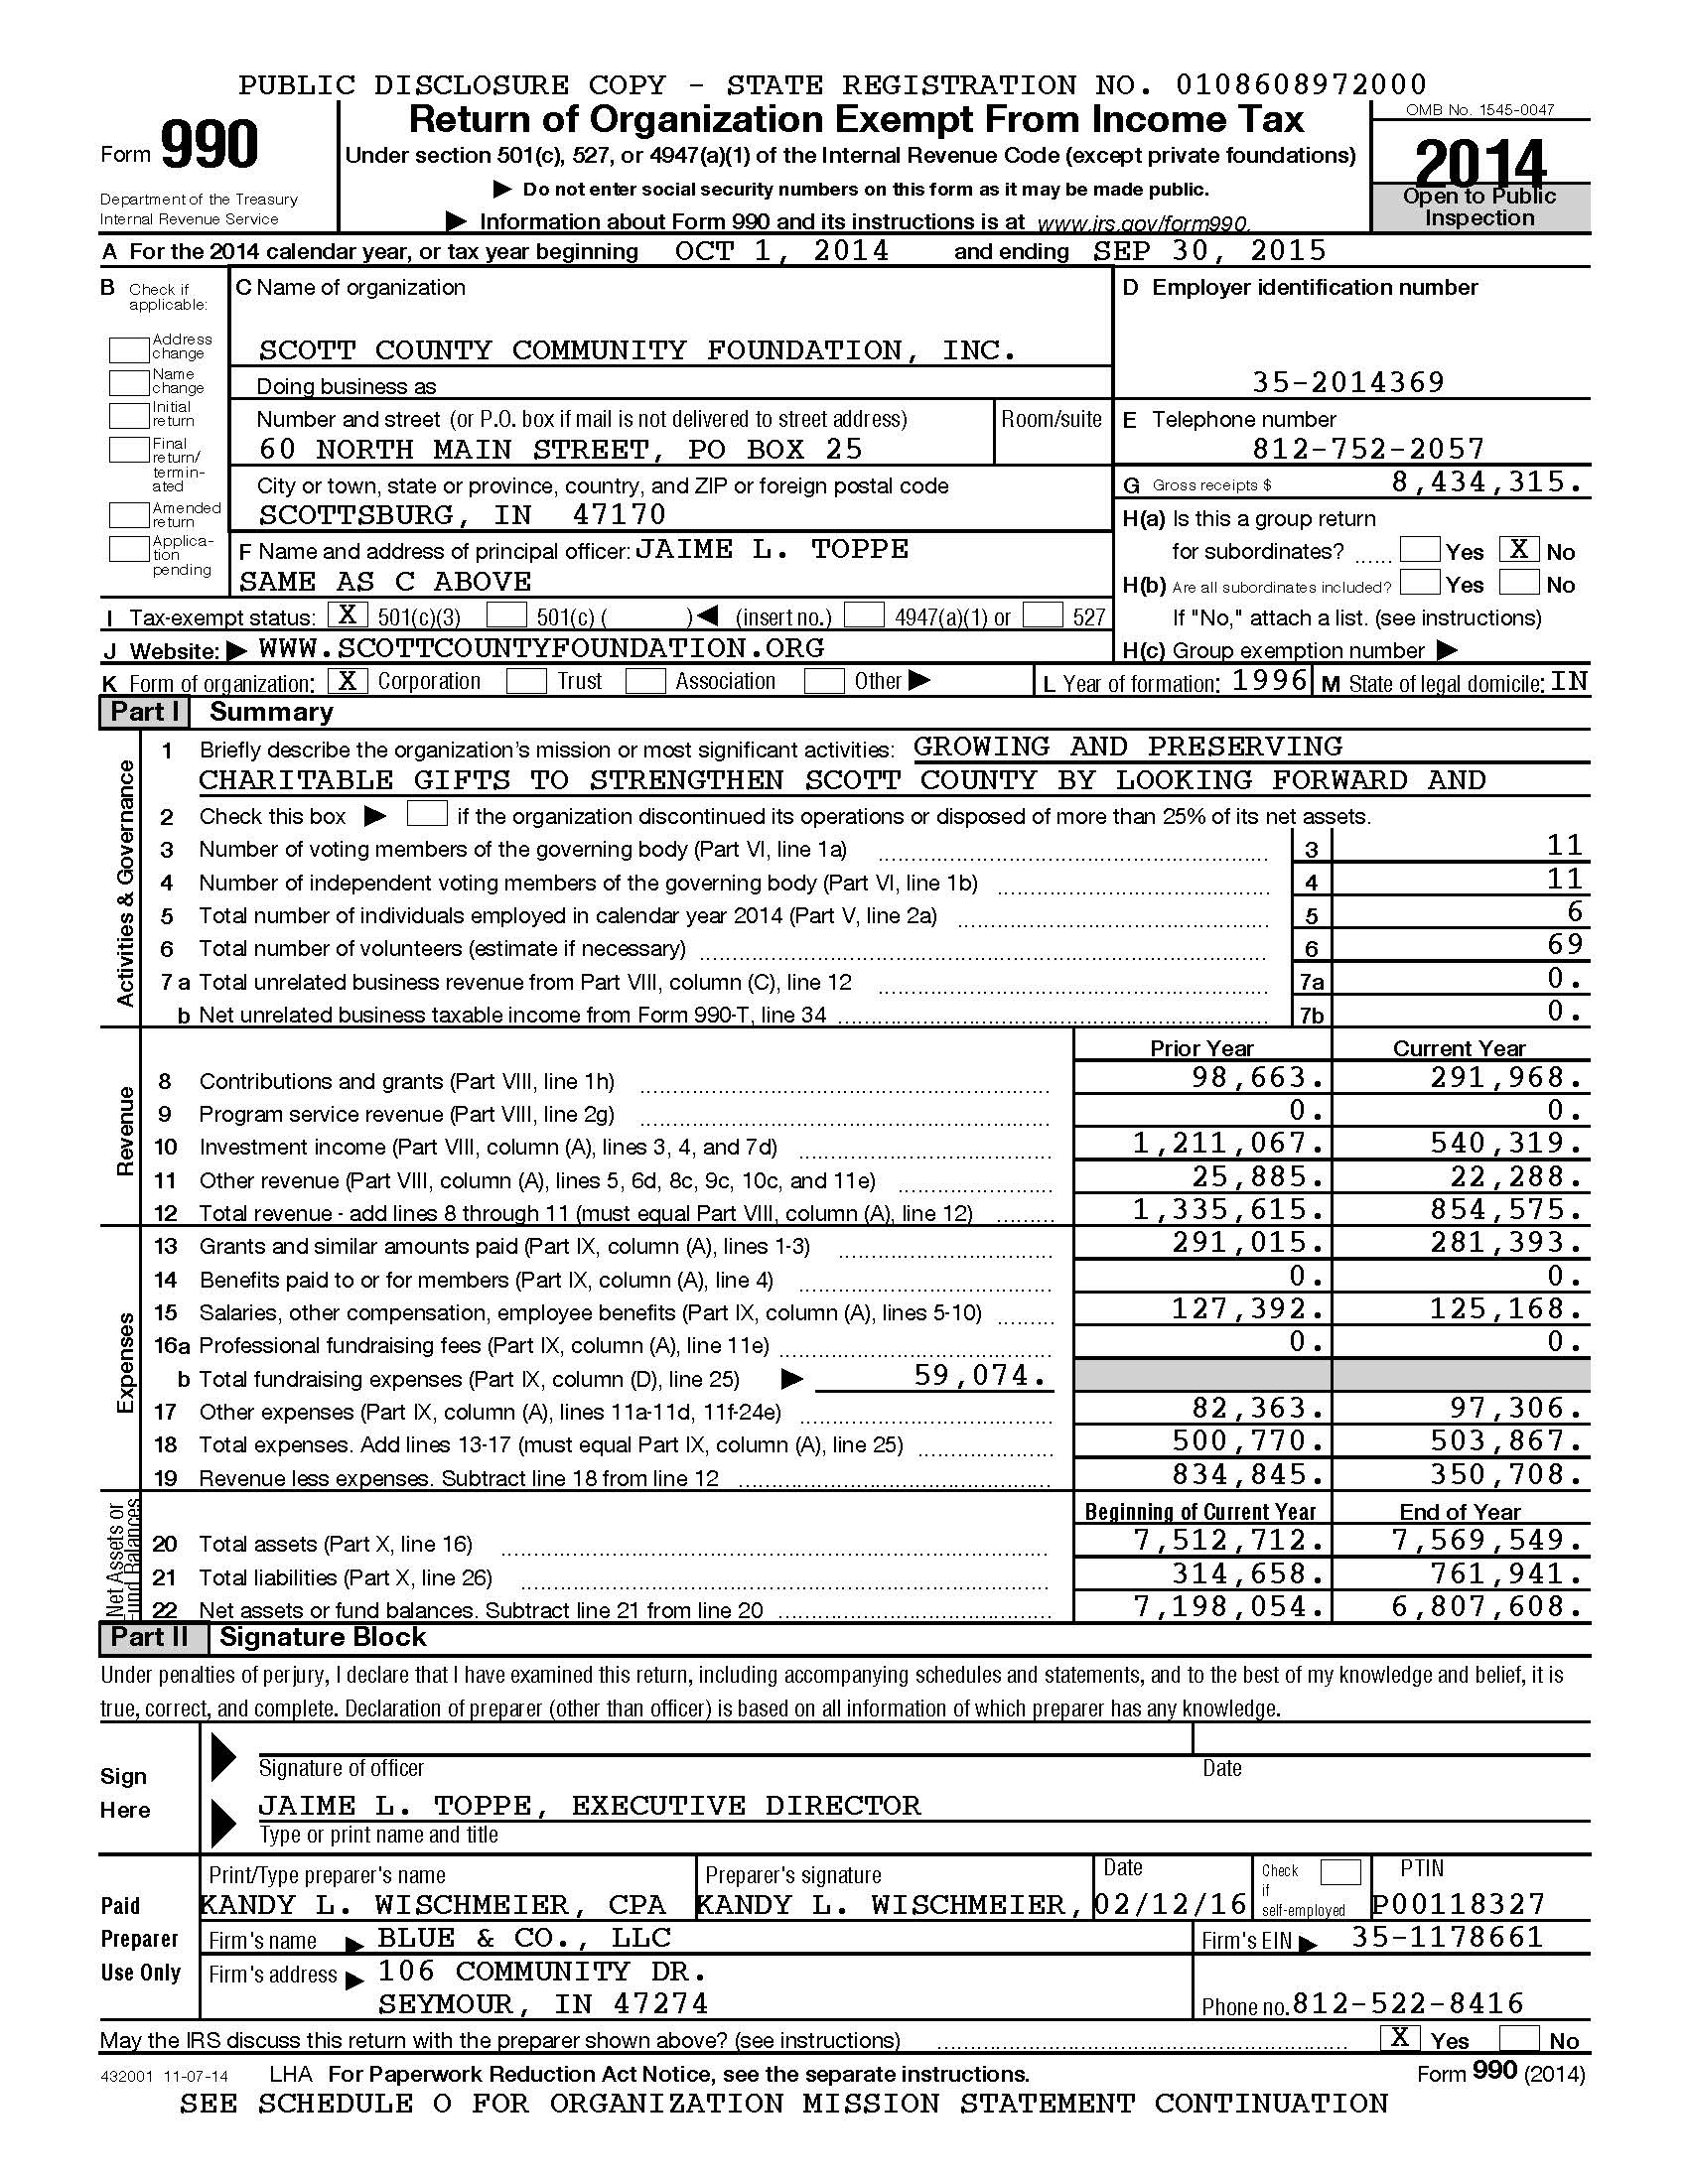 2014 IRS 990 Report